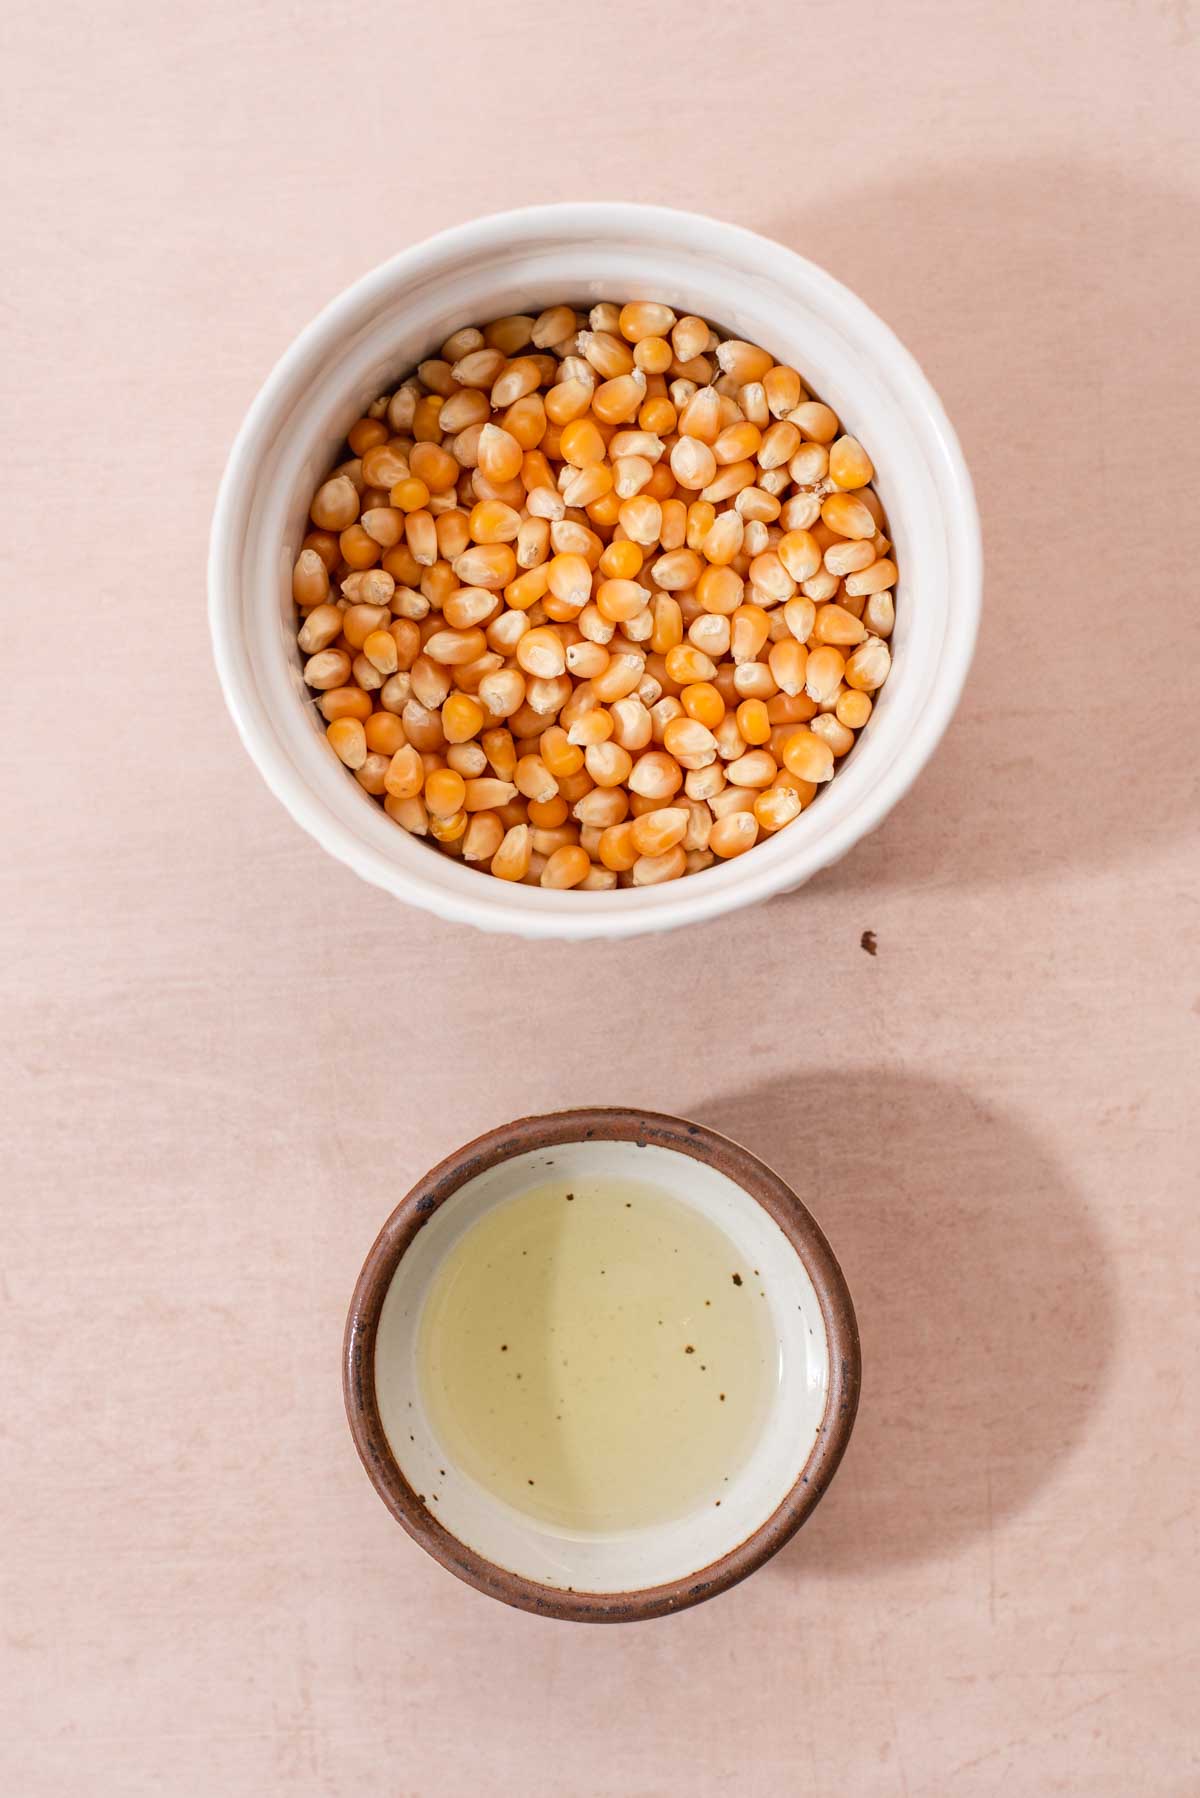 White jar of popcorn kernels and bowl of oil.